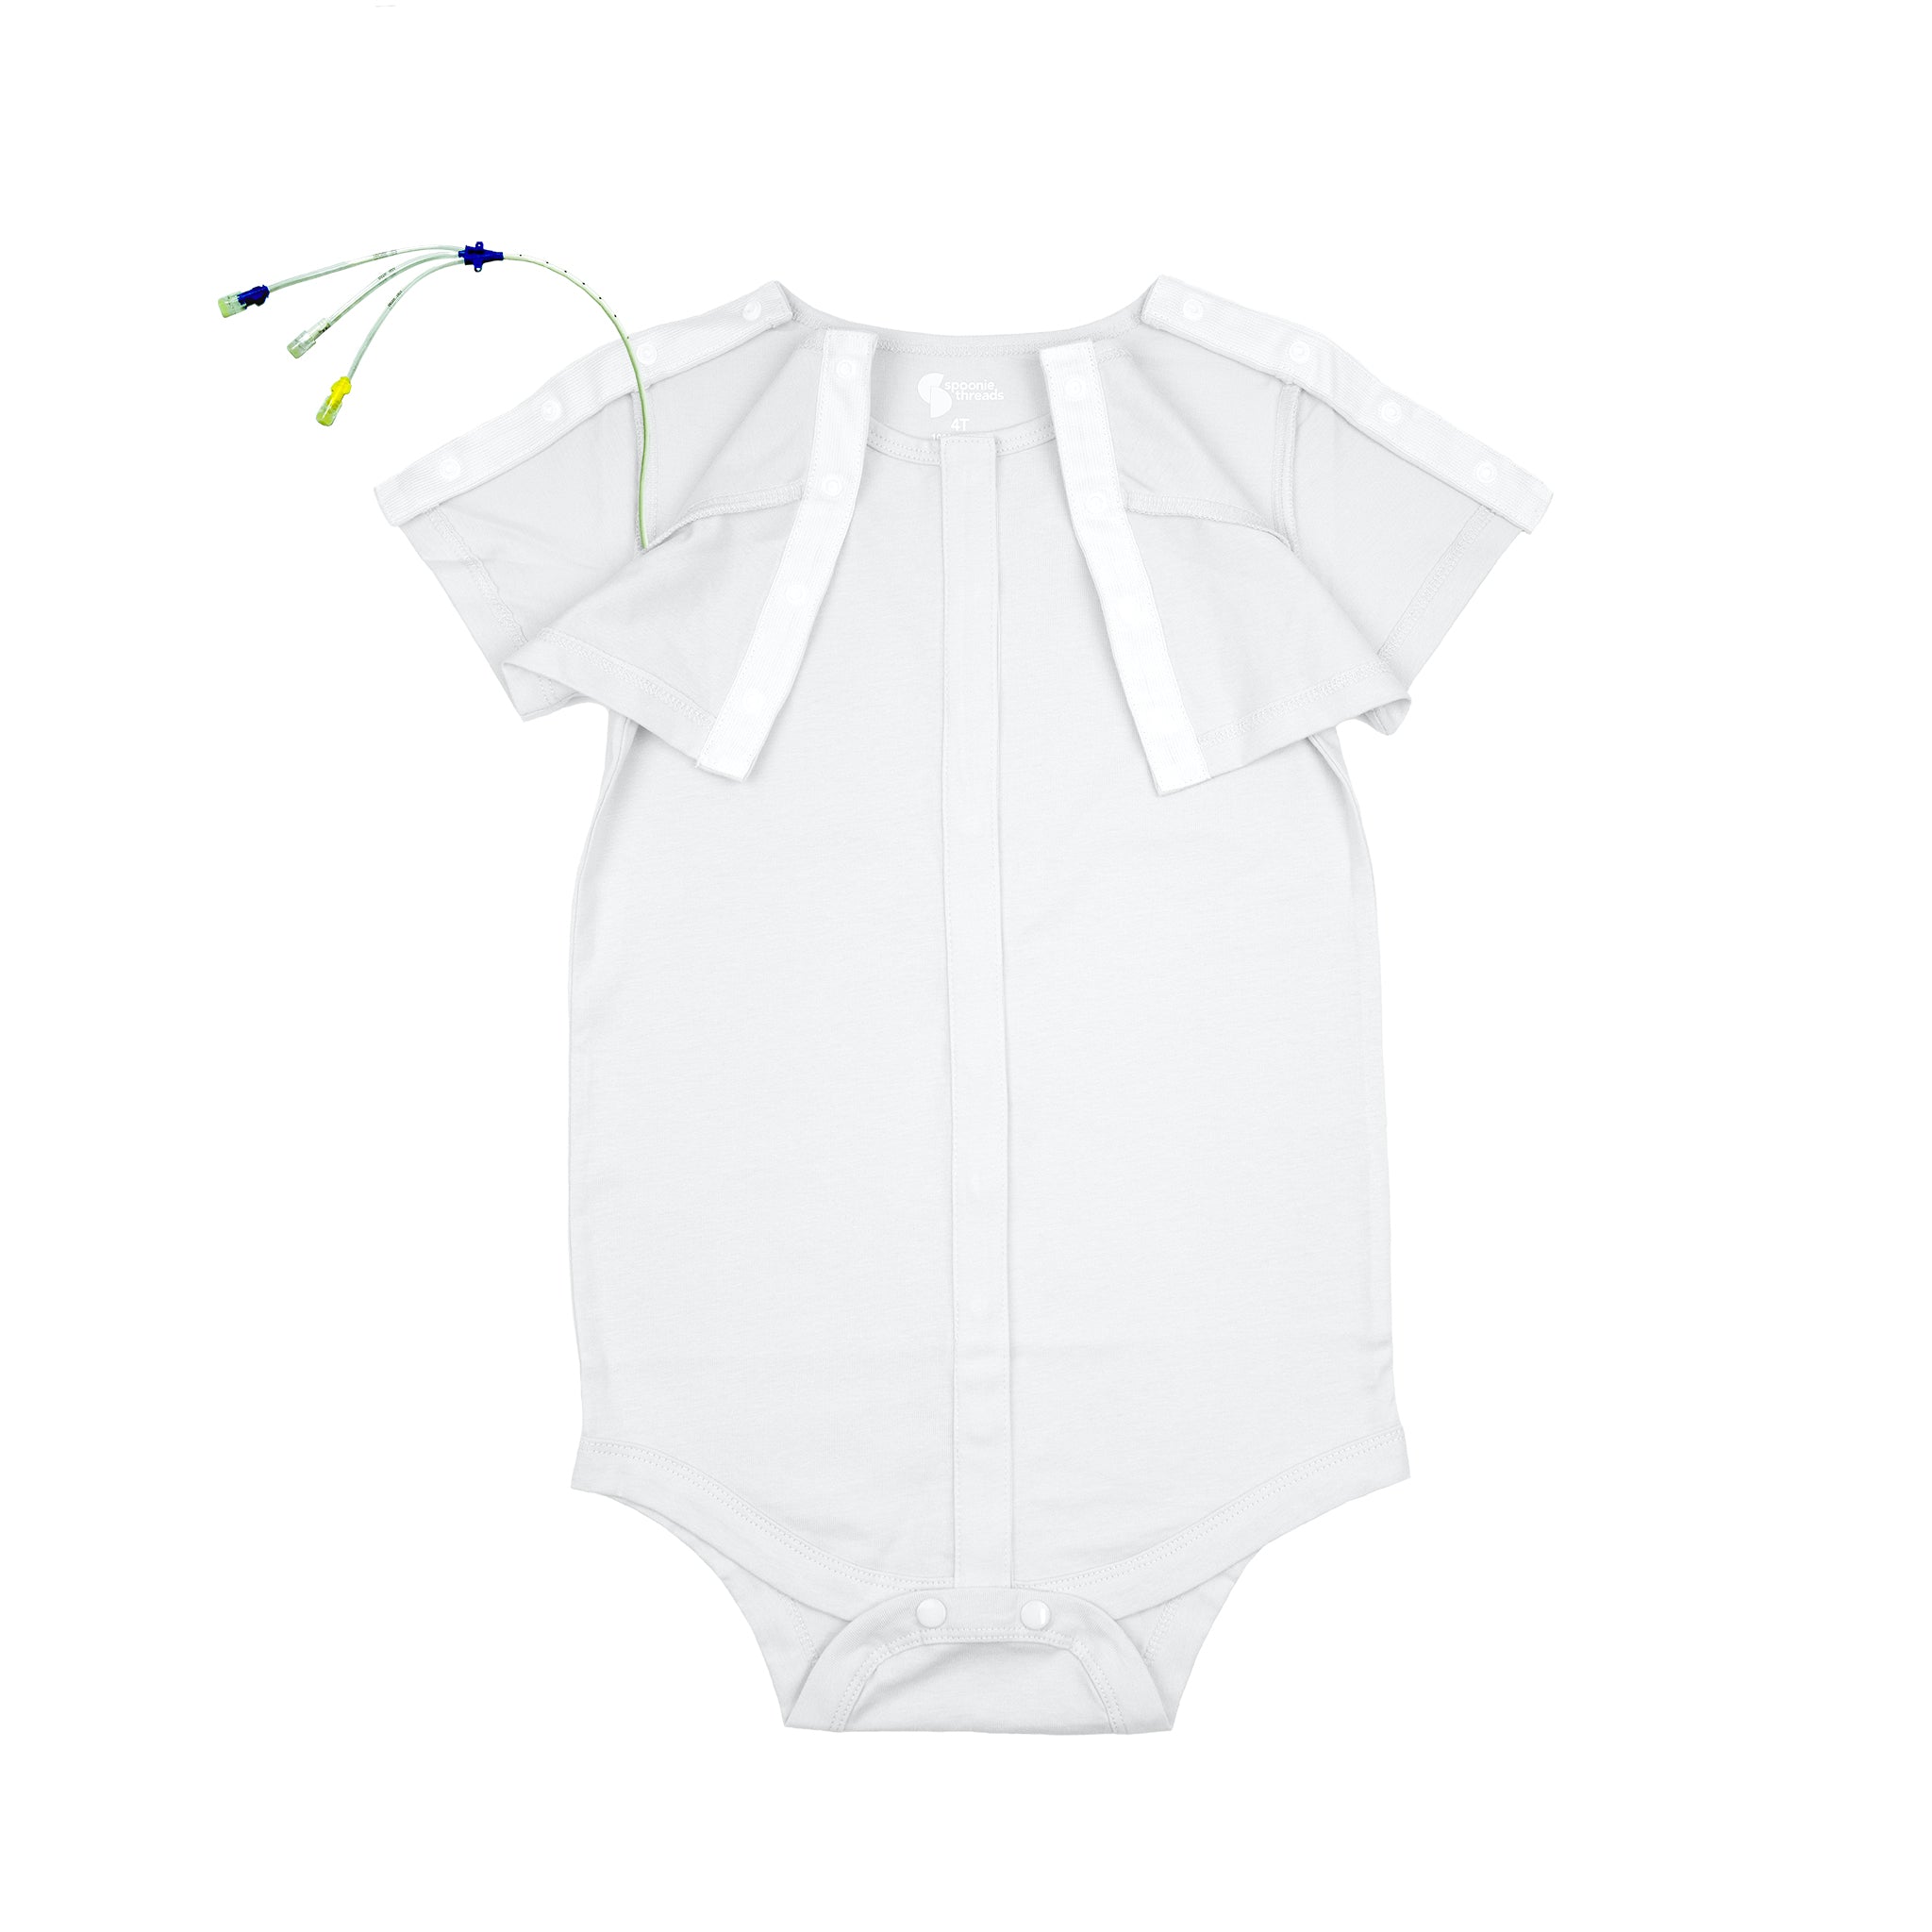 White All-Access Bodysuit | G-Tube, Catheter, NICU/PICU, Port-friendly adaptive clothing